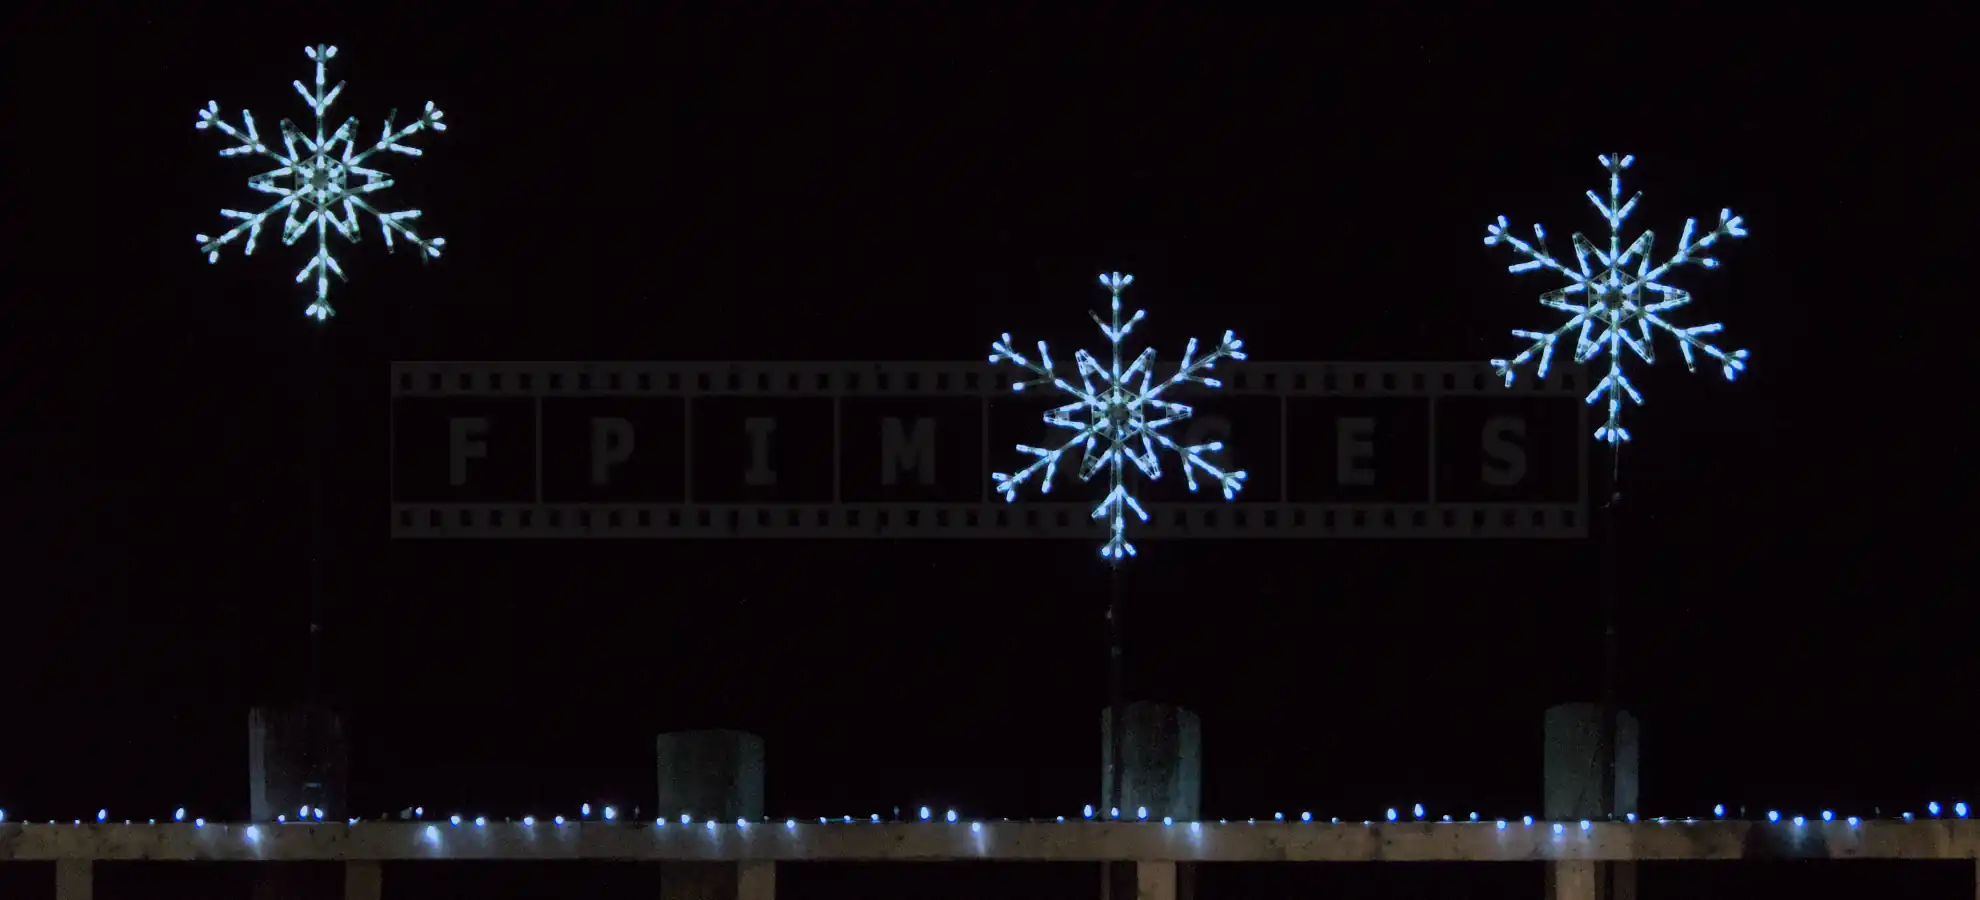 Night images of Xmas Lights - three snowflakes